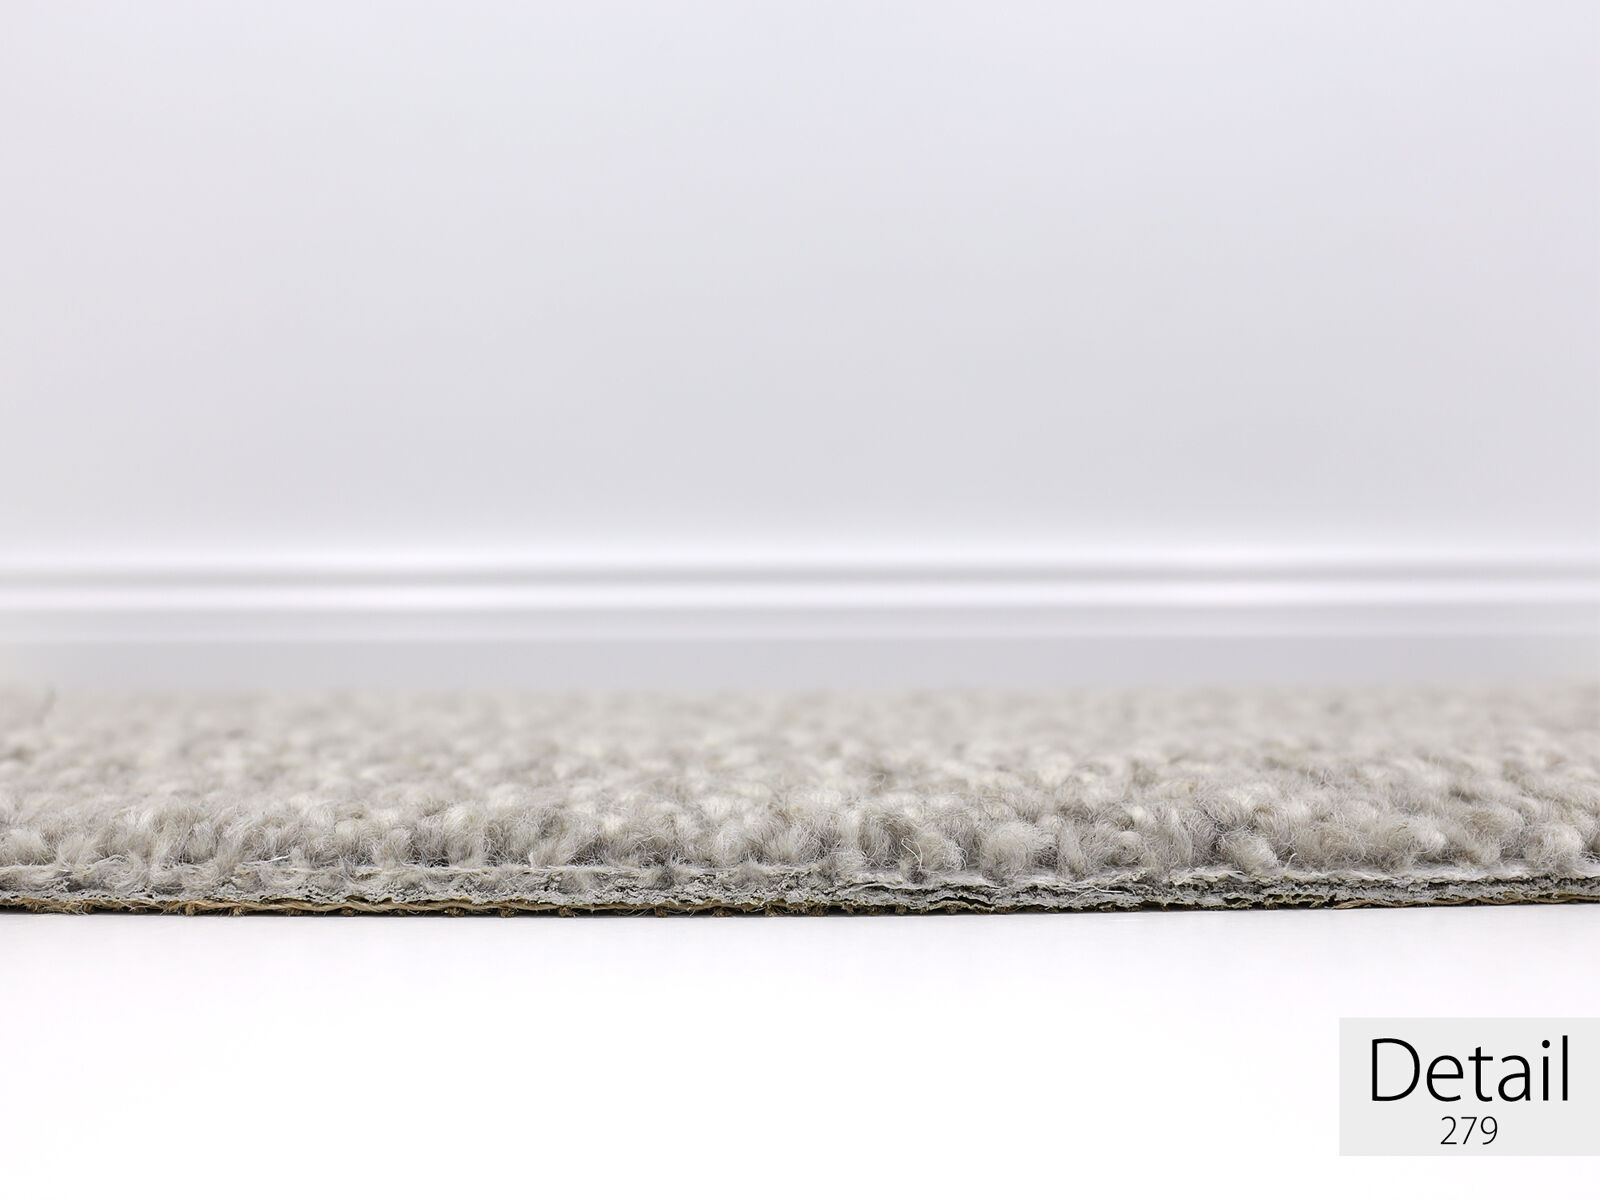 Berlin Berber Teppichboden | 100% Wolle | 400 & 500cm Breite